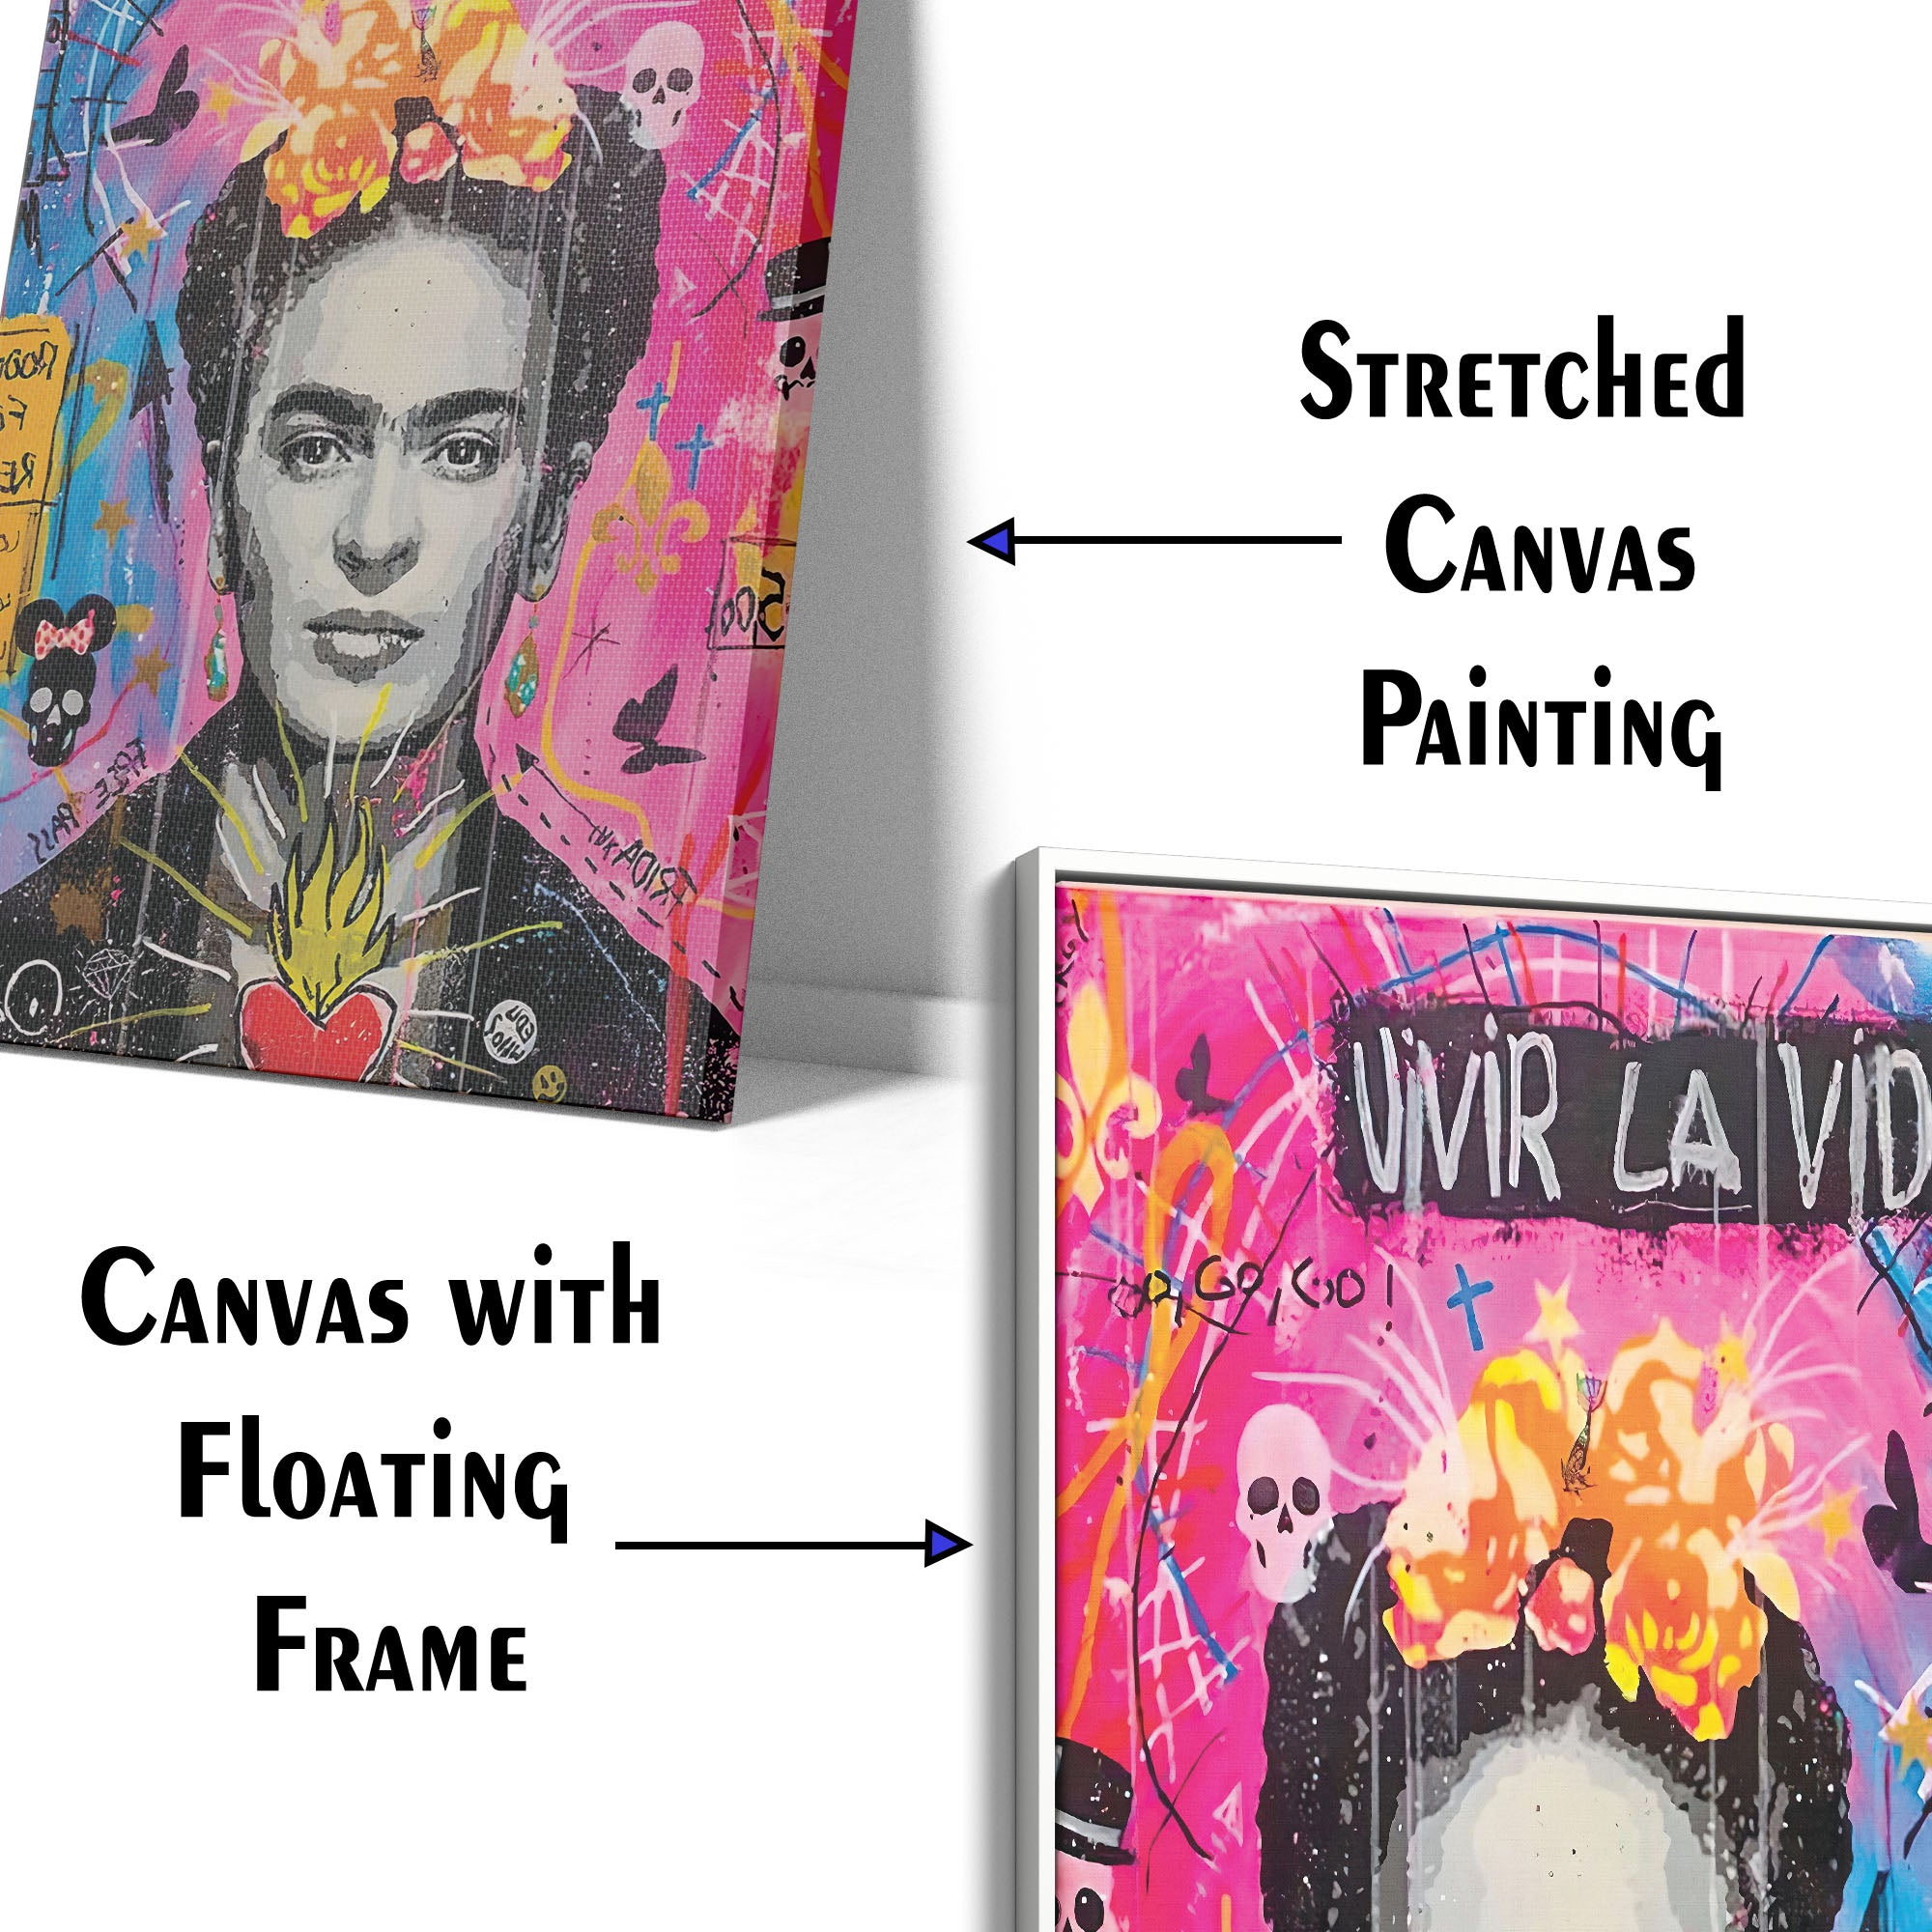 Vivir La vida Frida Kahlo Canvas Wall Painting